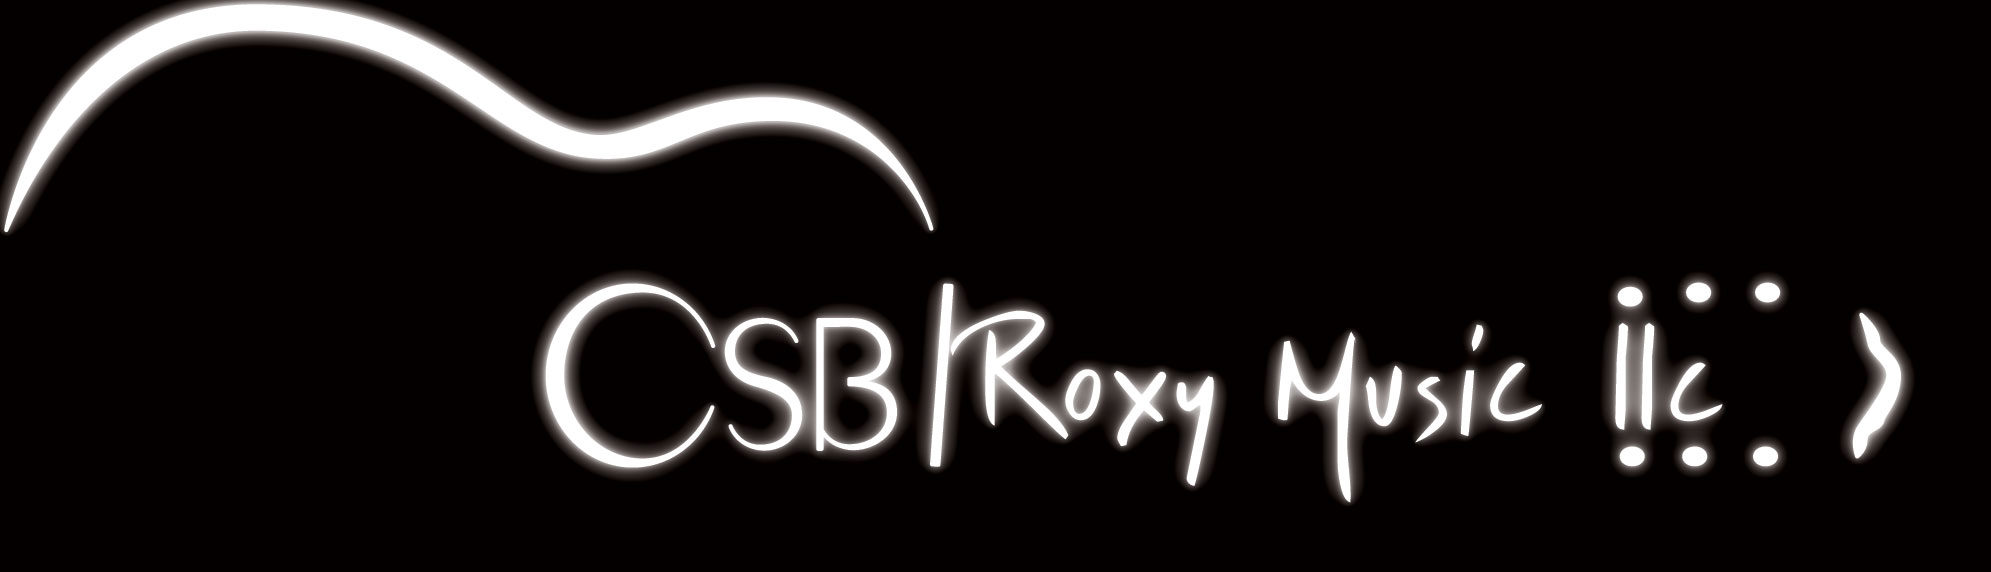 roxy music llc logo